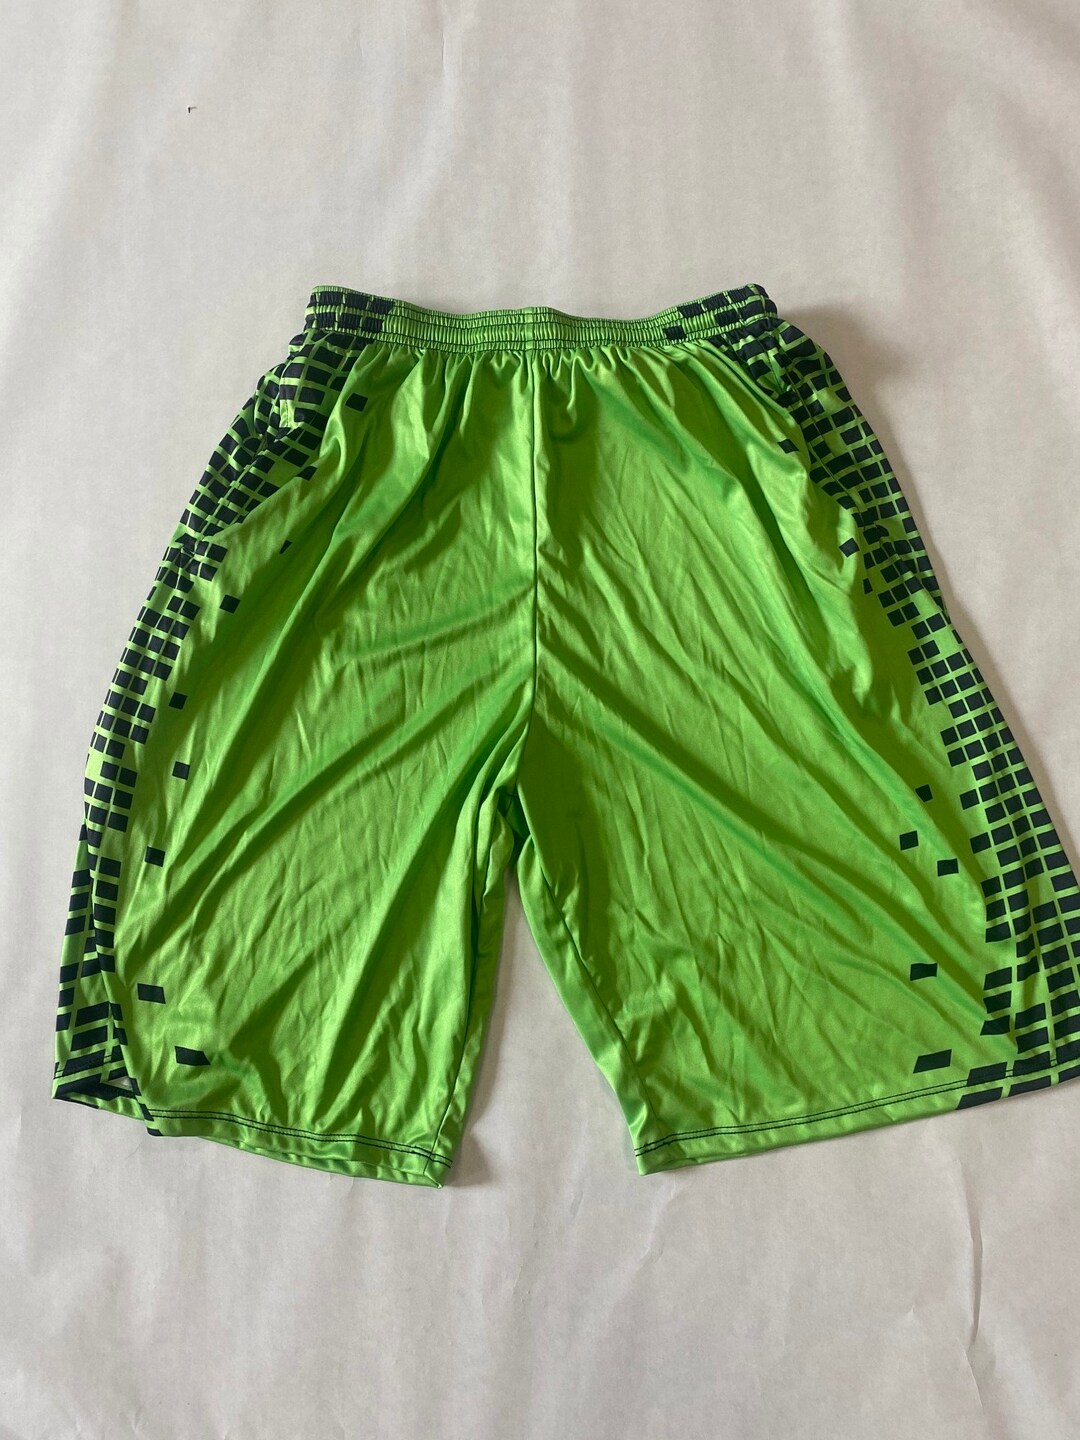 Neon Green Basketball Shorts - Etsy